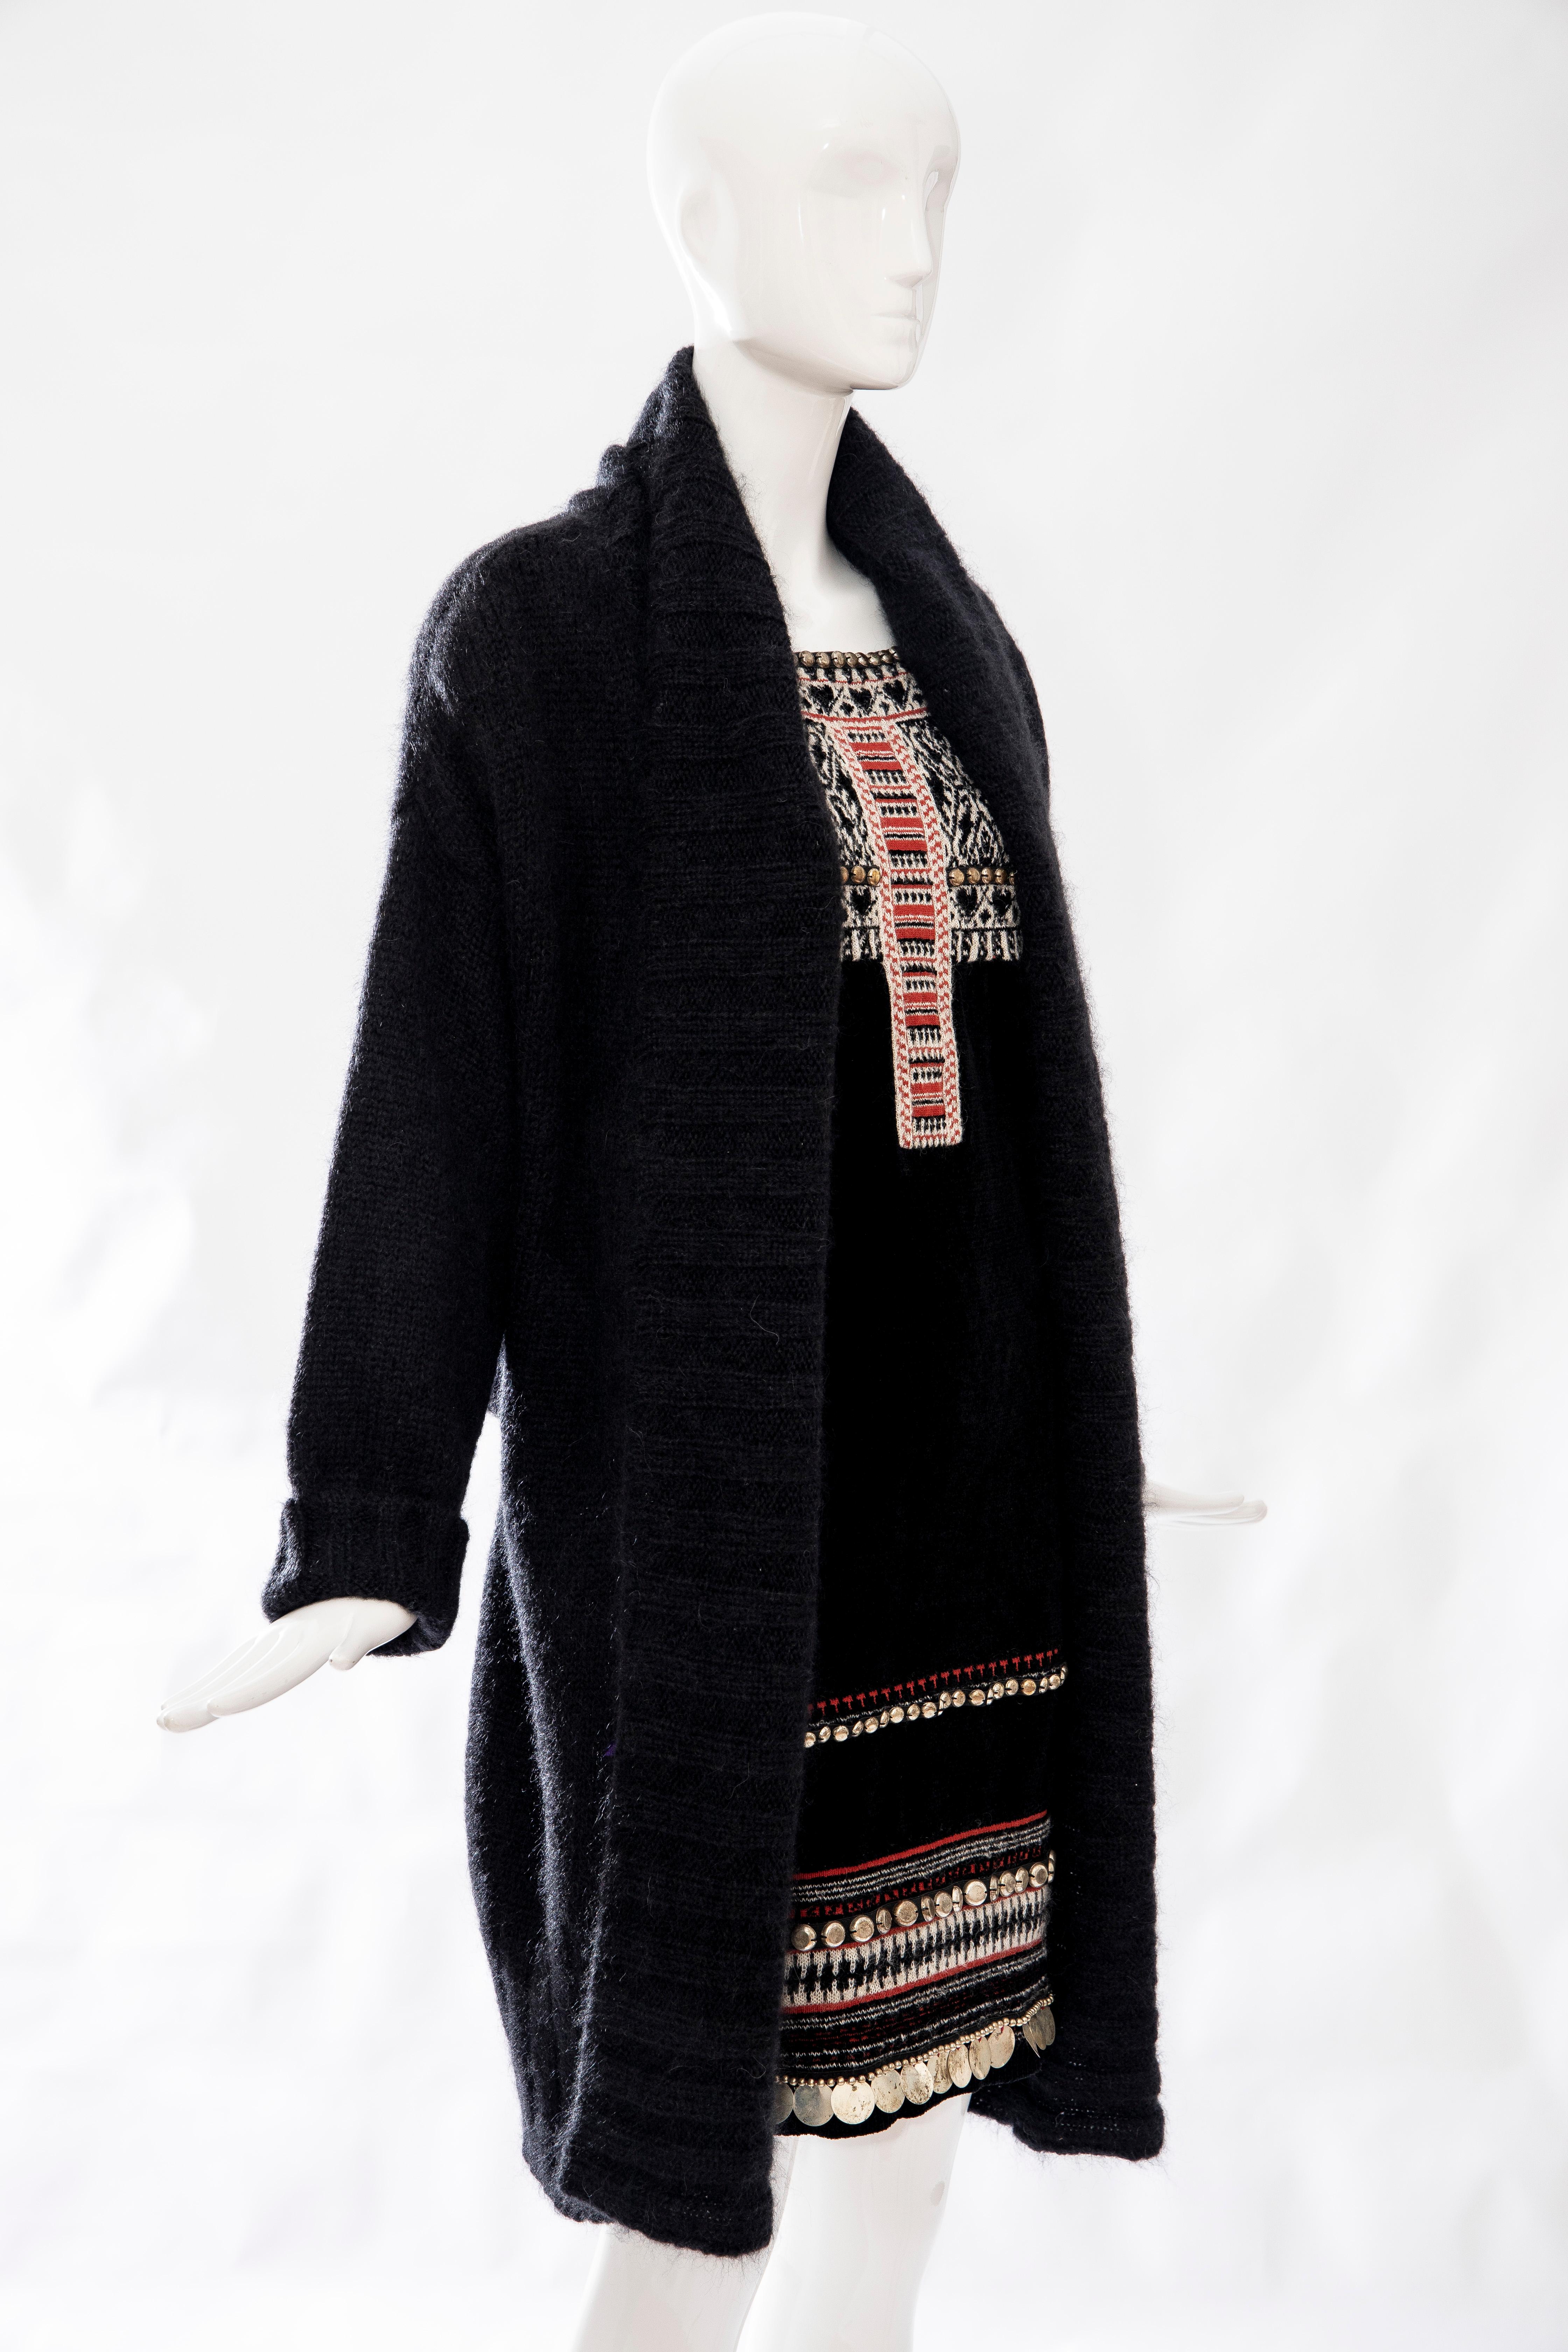 Jean Paul Gaultier Runway Mohair Knit Appliquéd Coins Sweater Dress , Fall 2010 For Sale 1